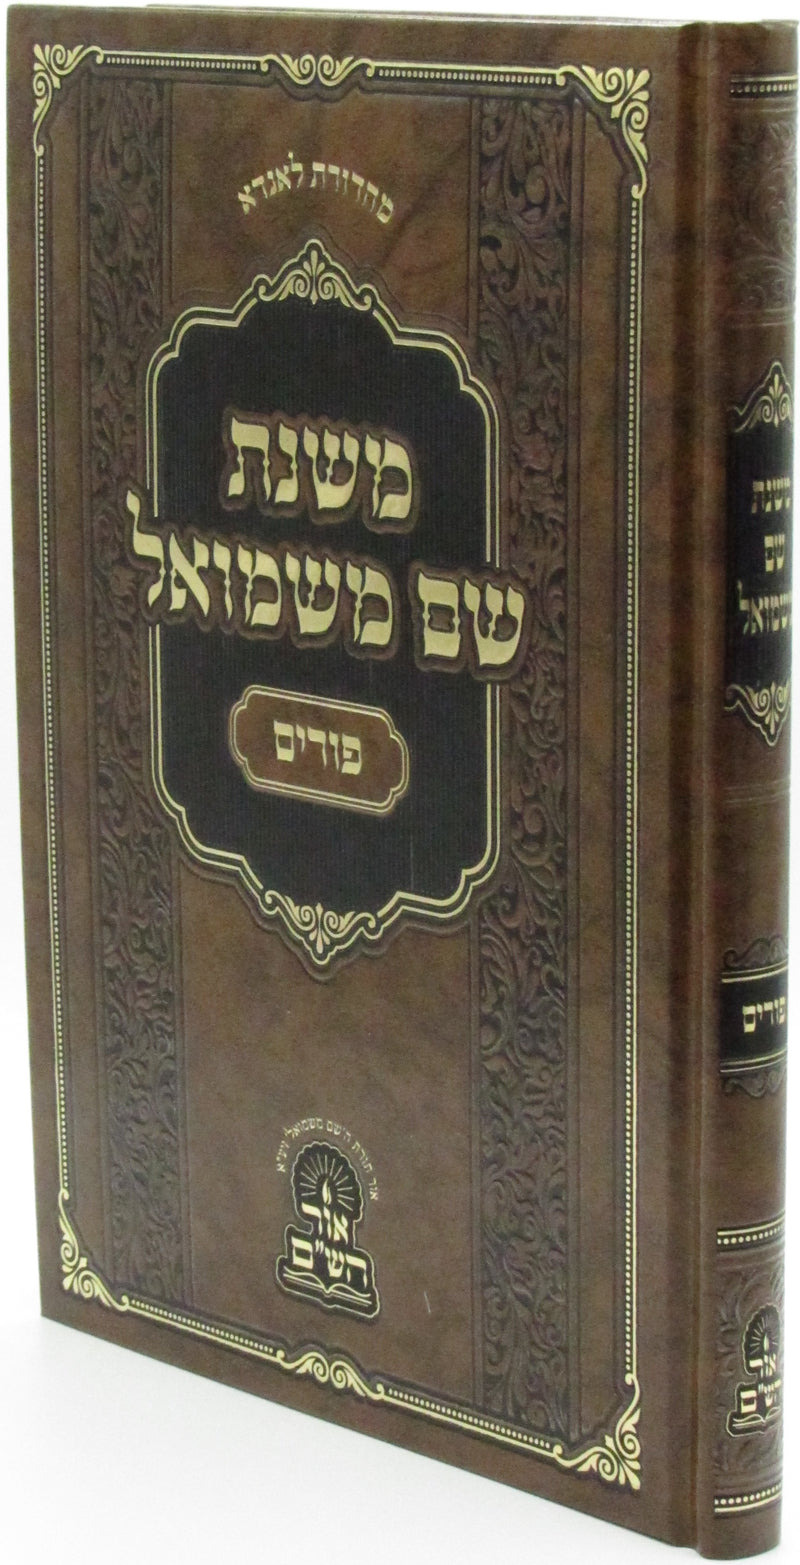 Mishnas Shem M'Shmuel Al Purim - משנת שם משמואל על פורים